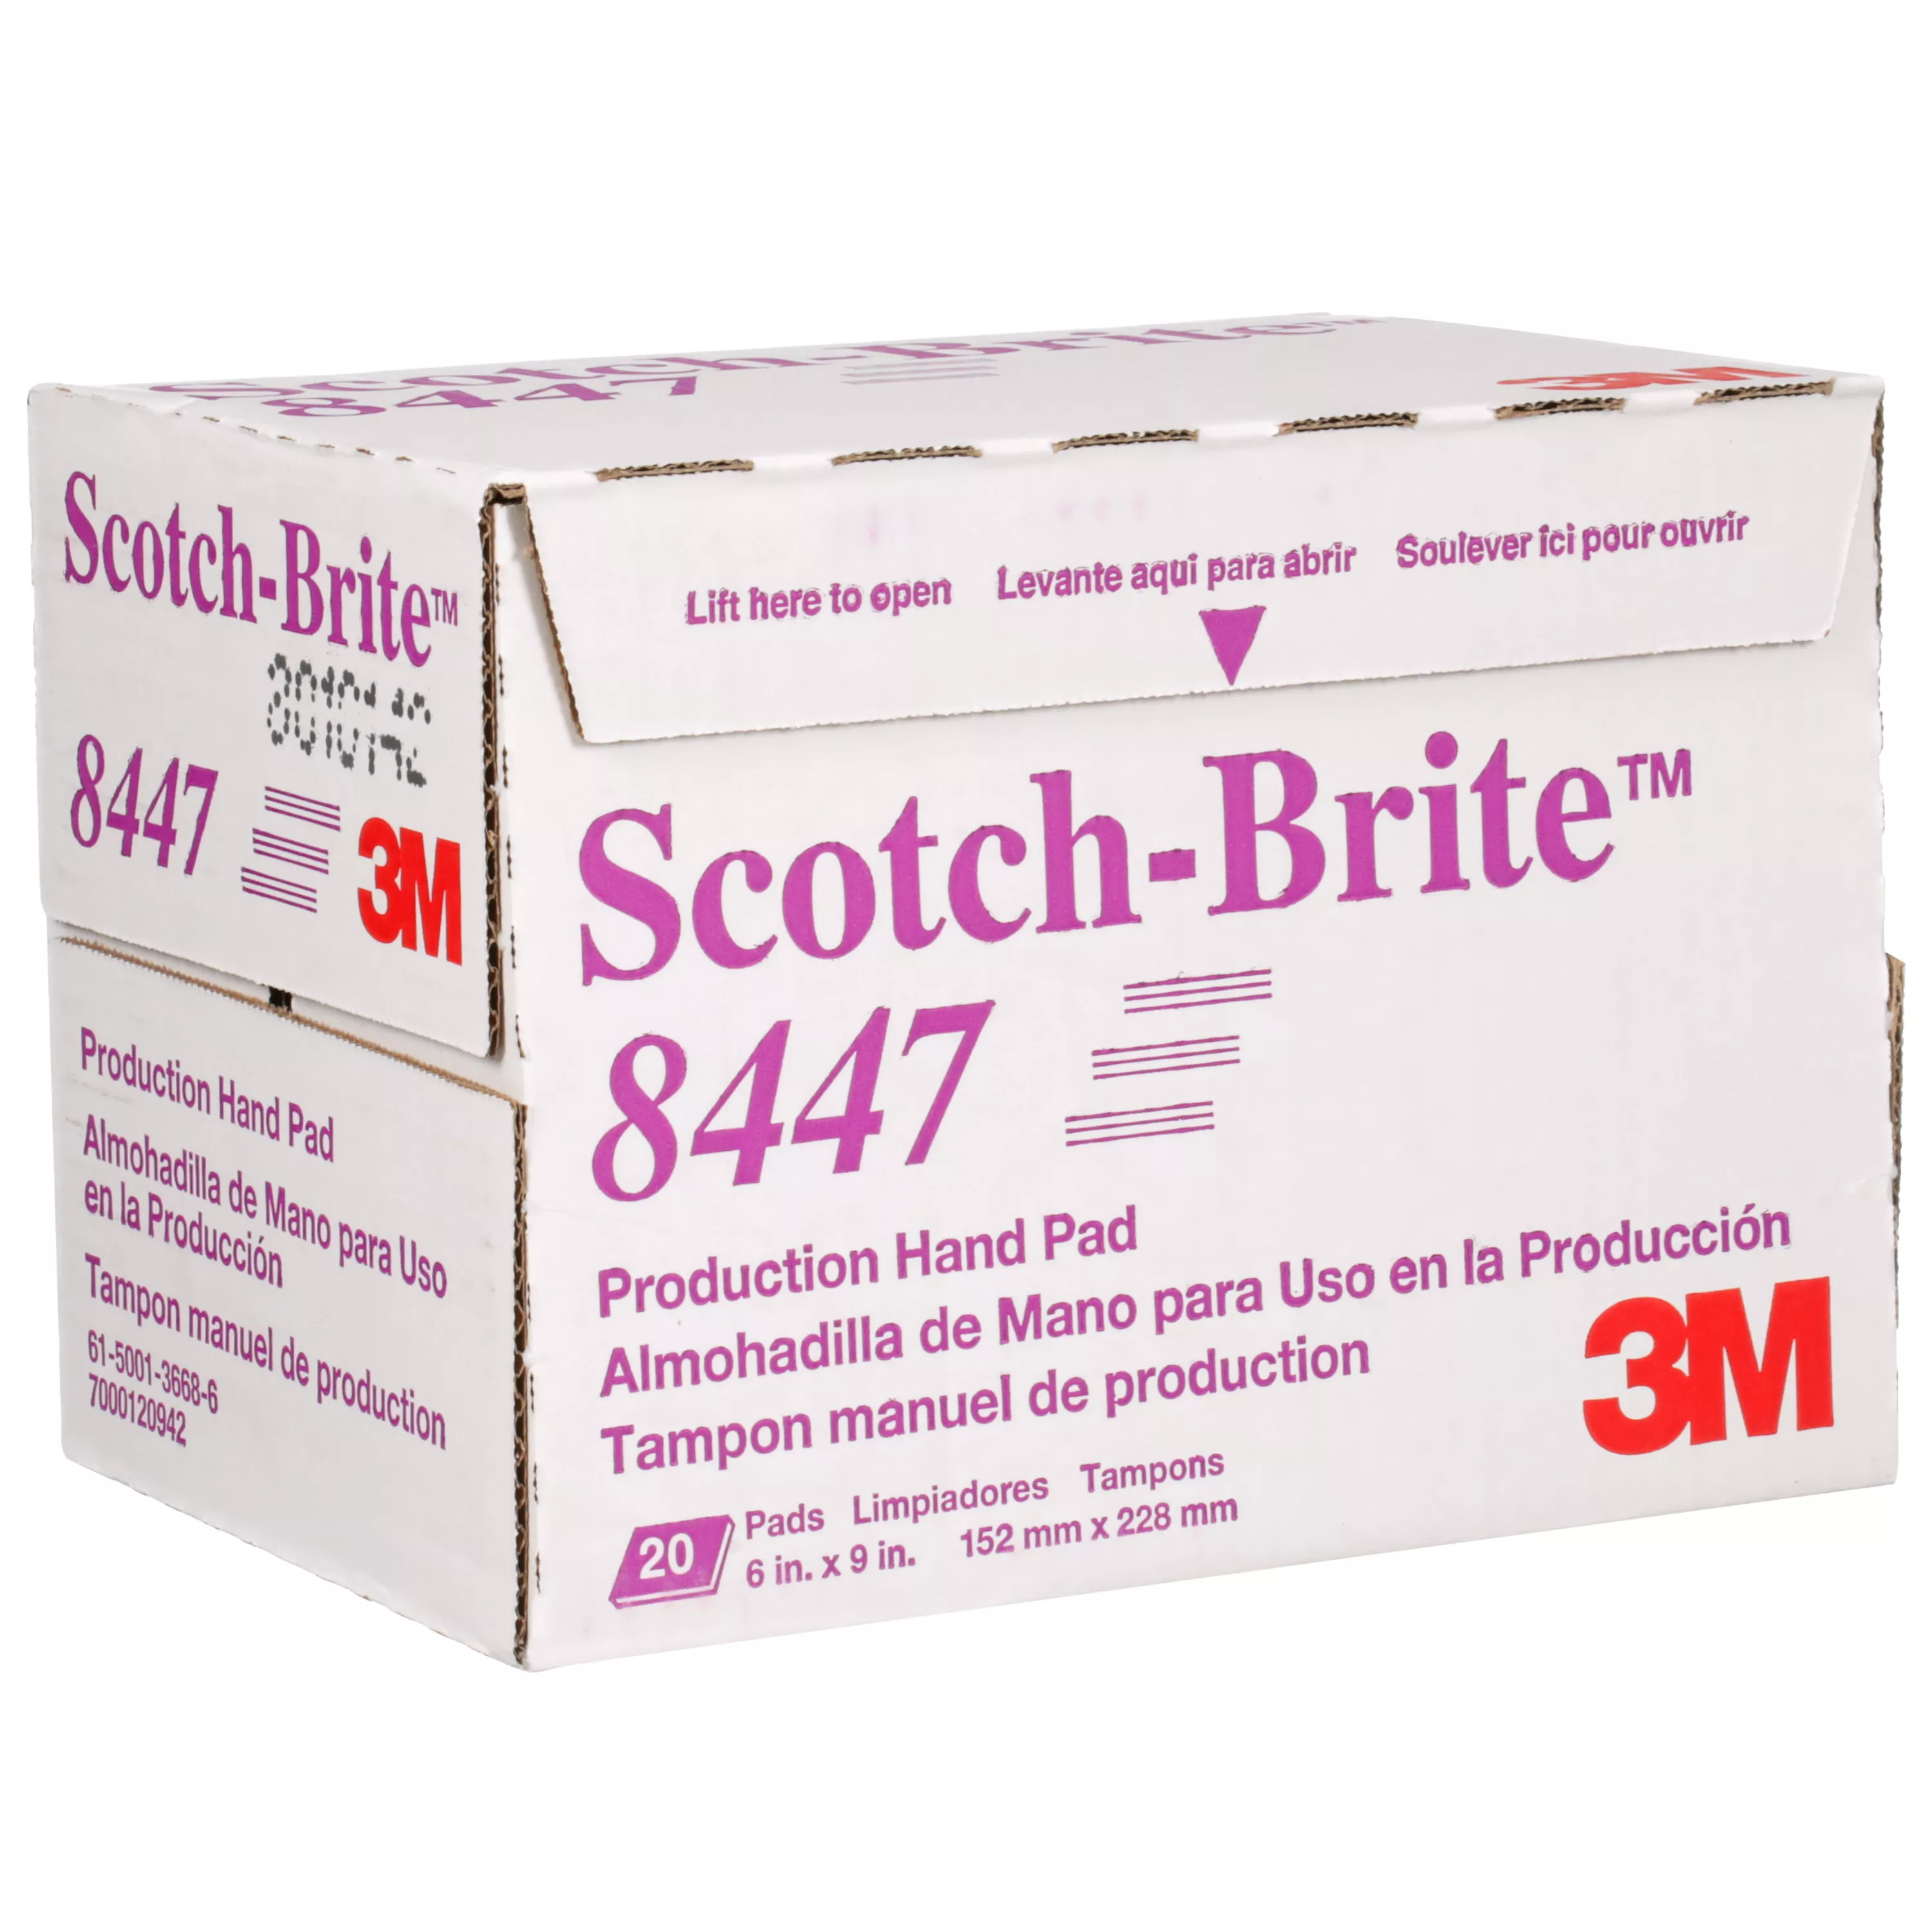 SKU 7000120942 | Scotch-Brite™ Production Hand Pad 8447